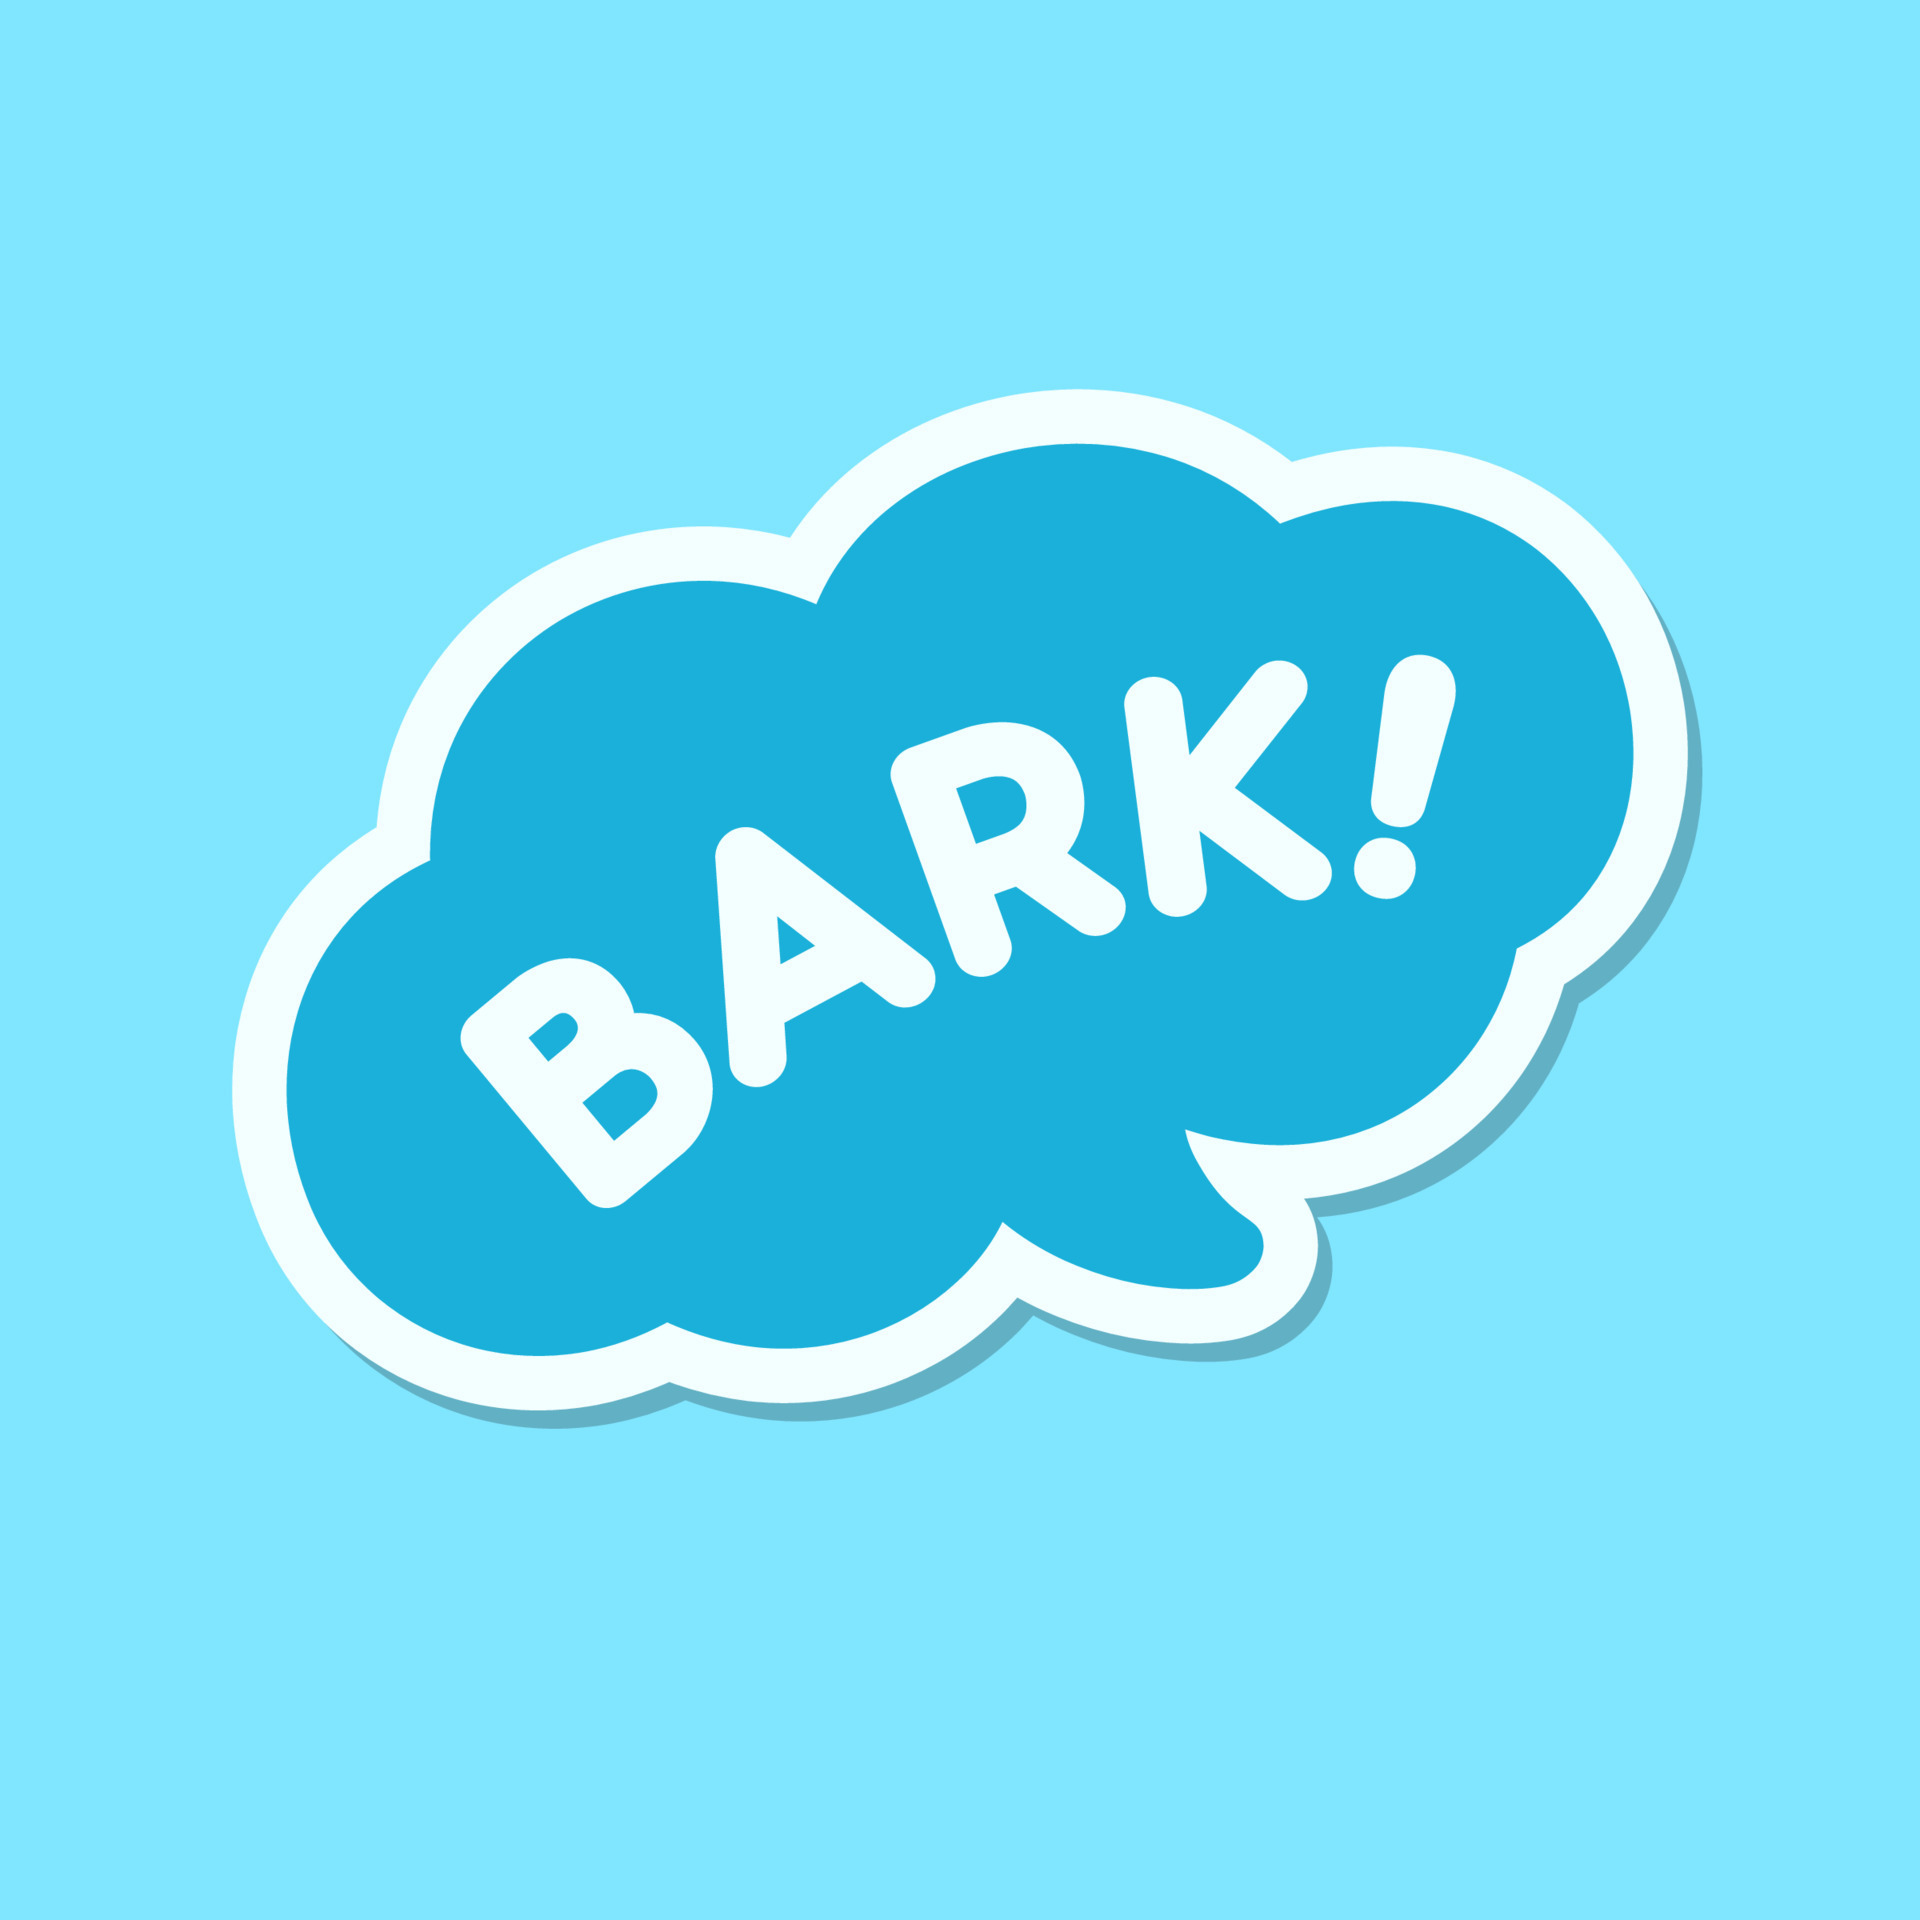 Dog bark animal sound effect text in a speech bubble balloon clipart. Cute  cartoon onomatopoeia comics and lettering. 20737020 Vector Art at Vecteezy